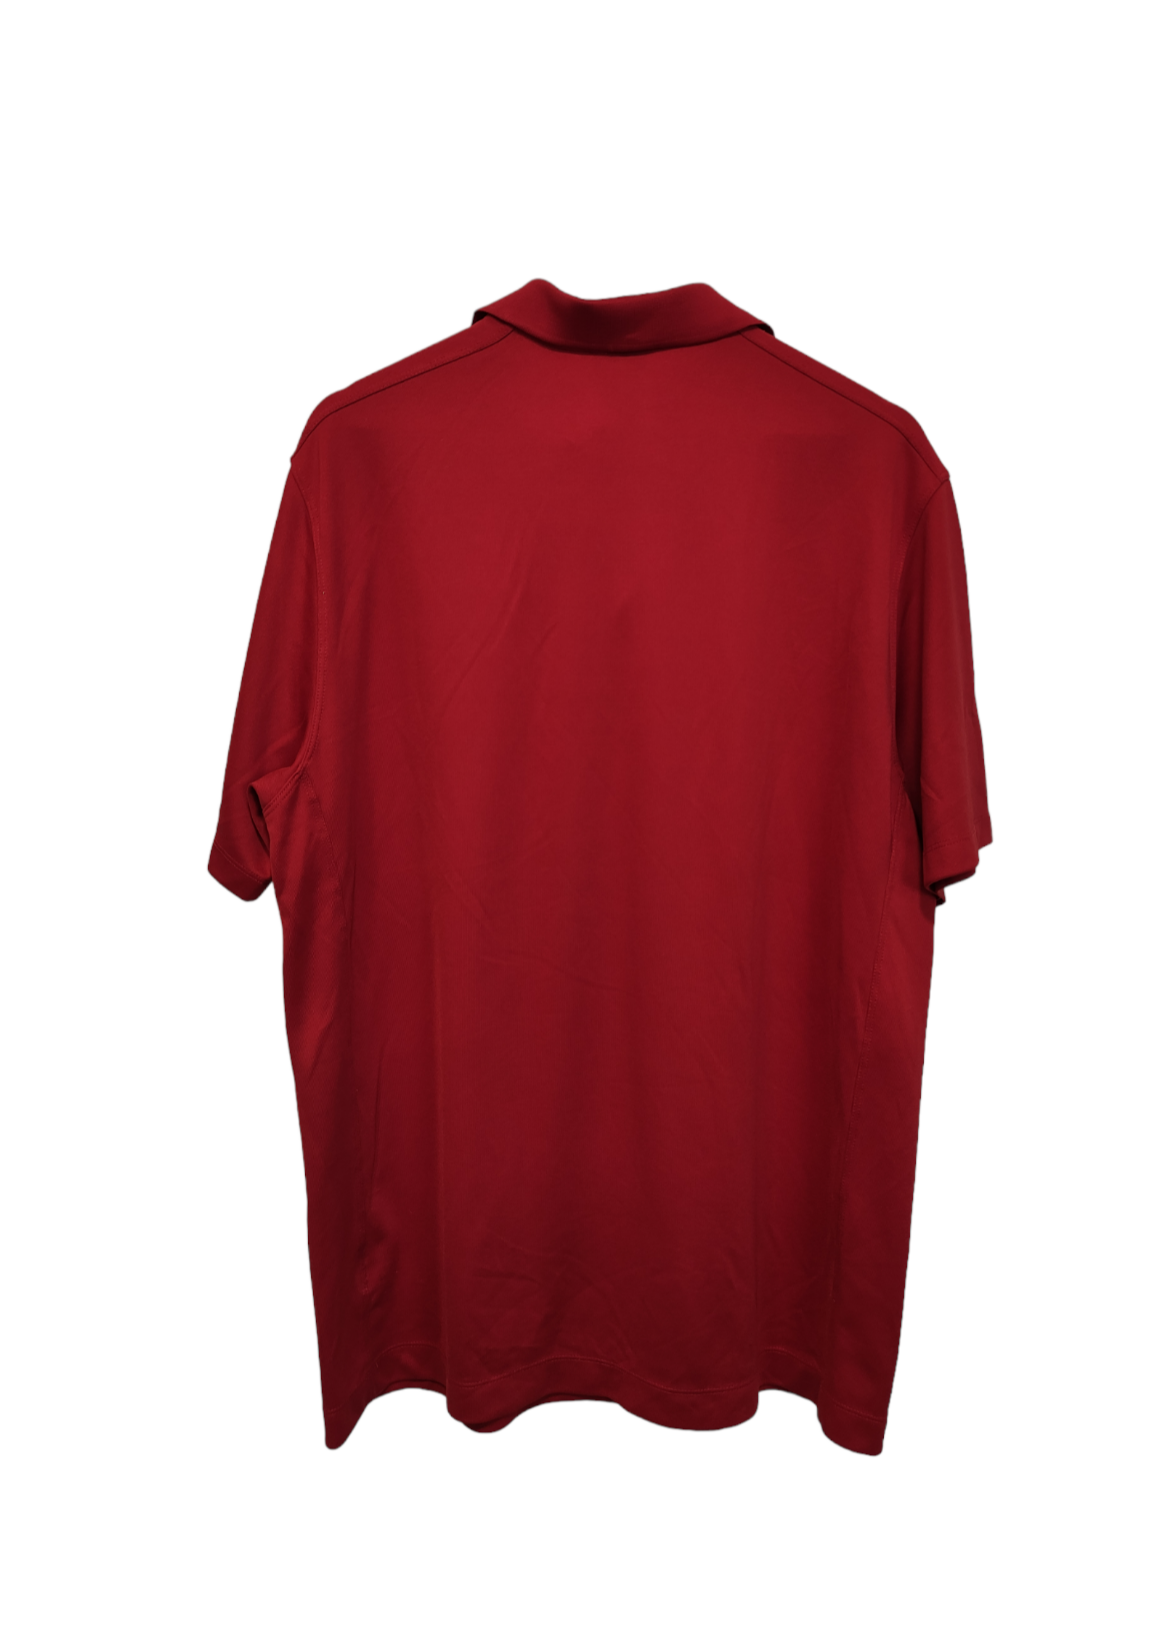 Top Branded, Αθλητική Ανδρική Μπλούζα - T-Shirt με γιακά σε Κόκκινο Χρώμα (XL)